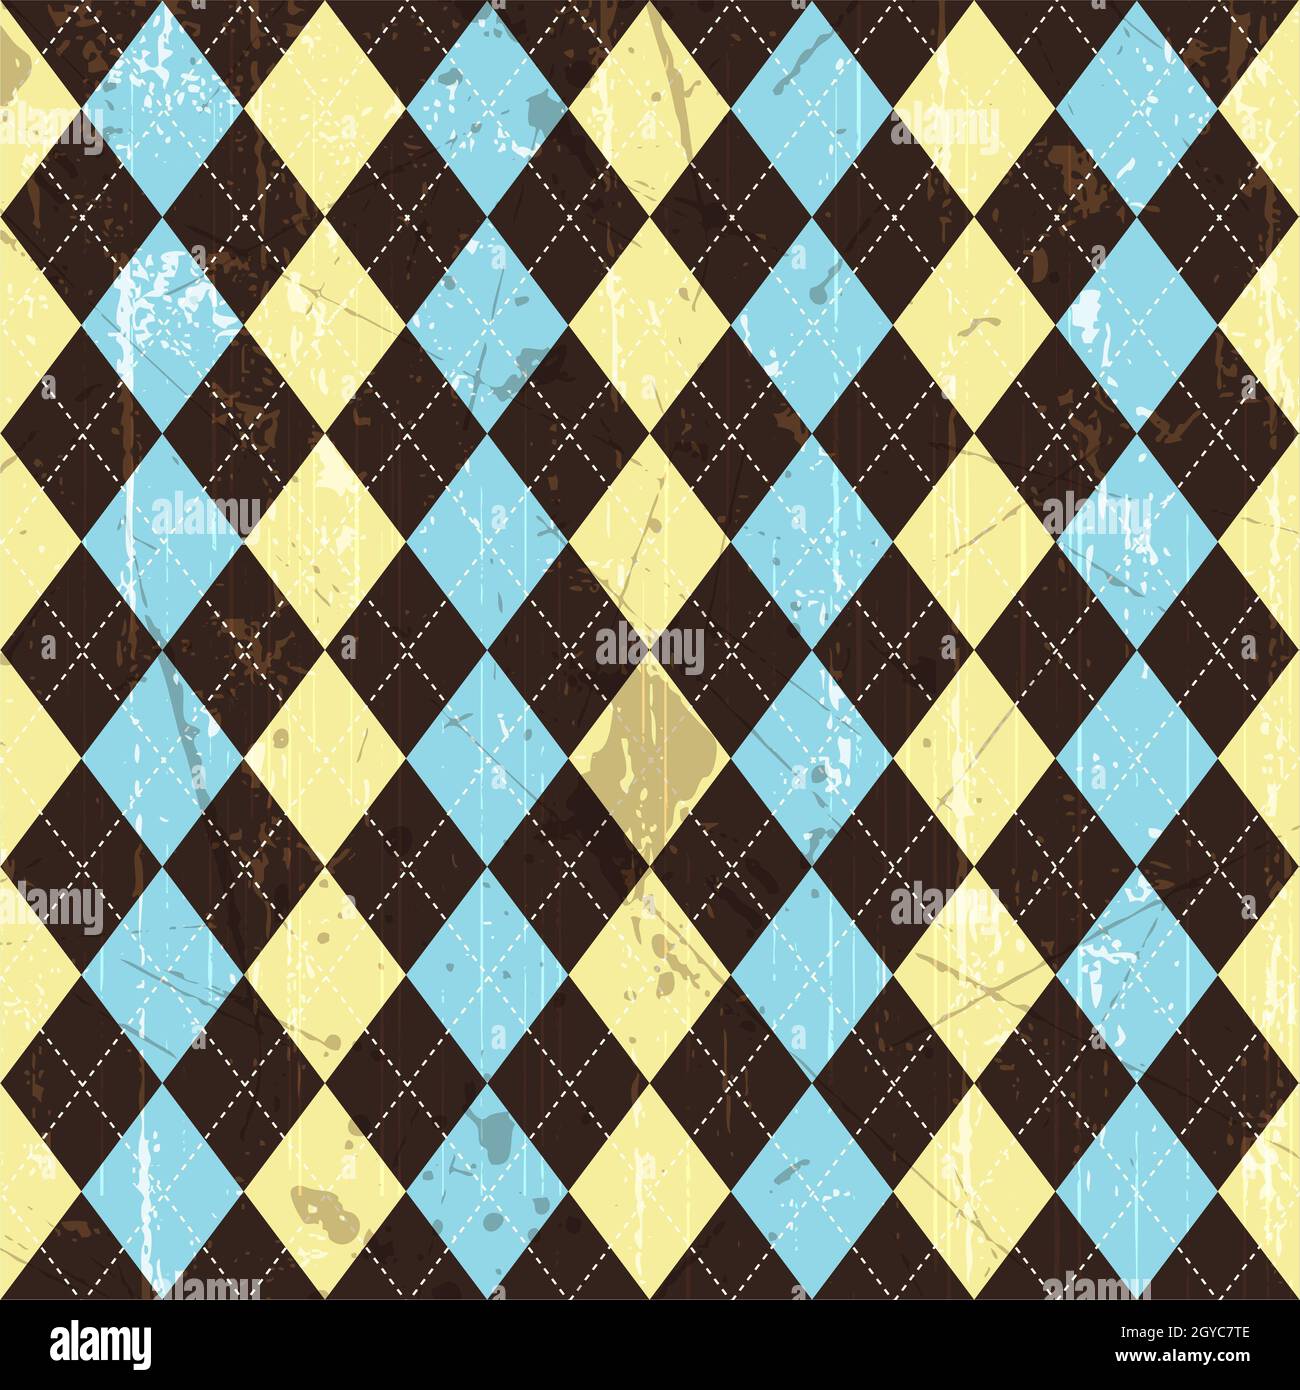 Seamless tiled background of a grunge argyle style pattern Stock Photo